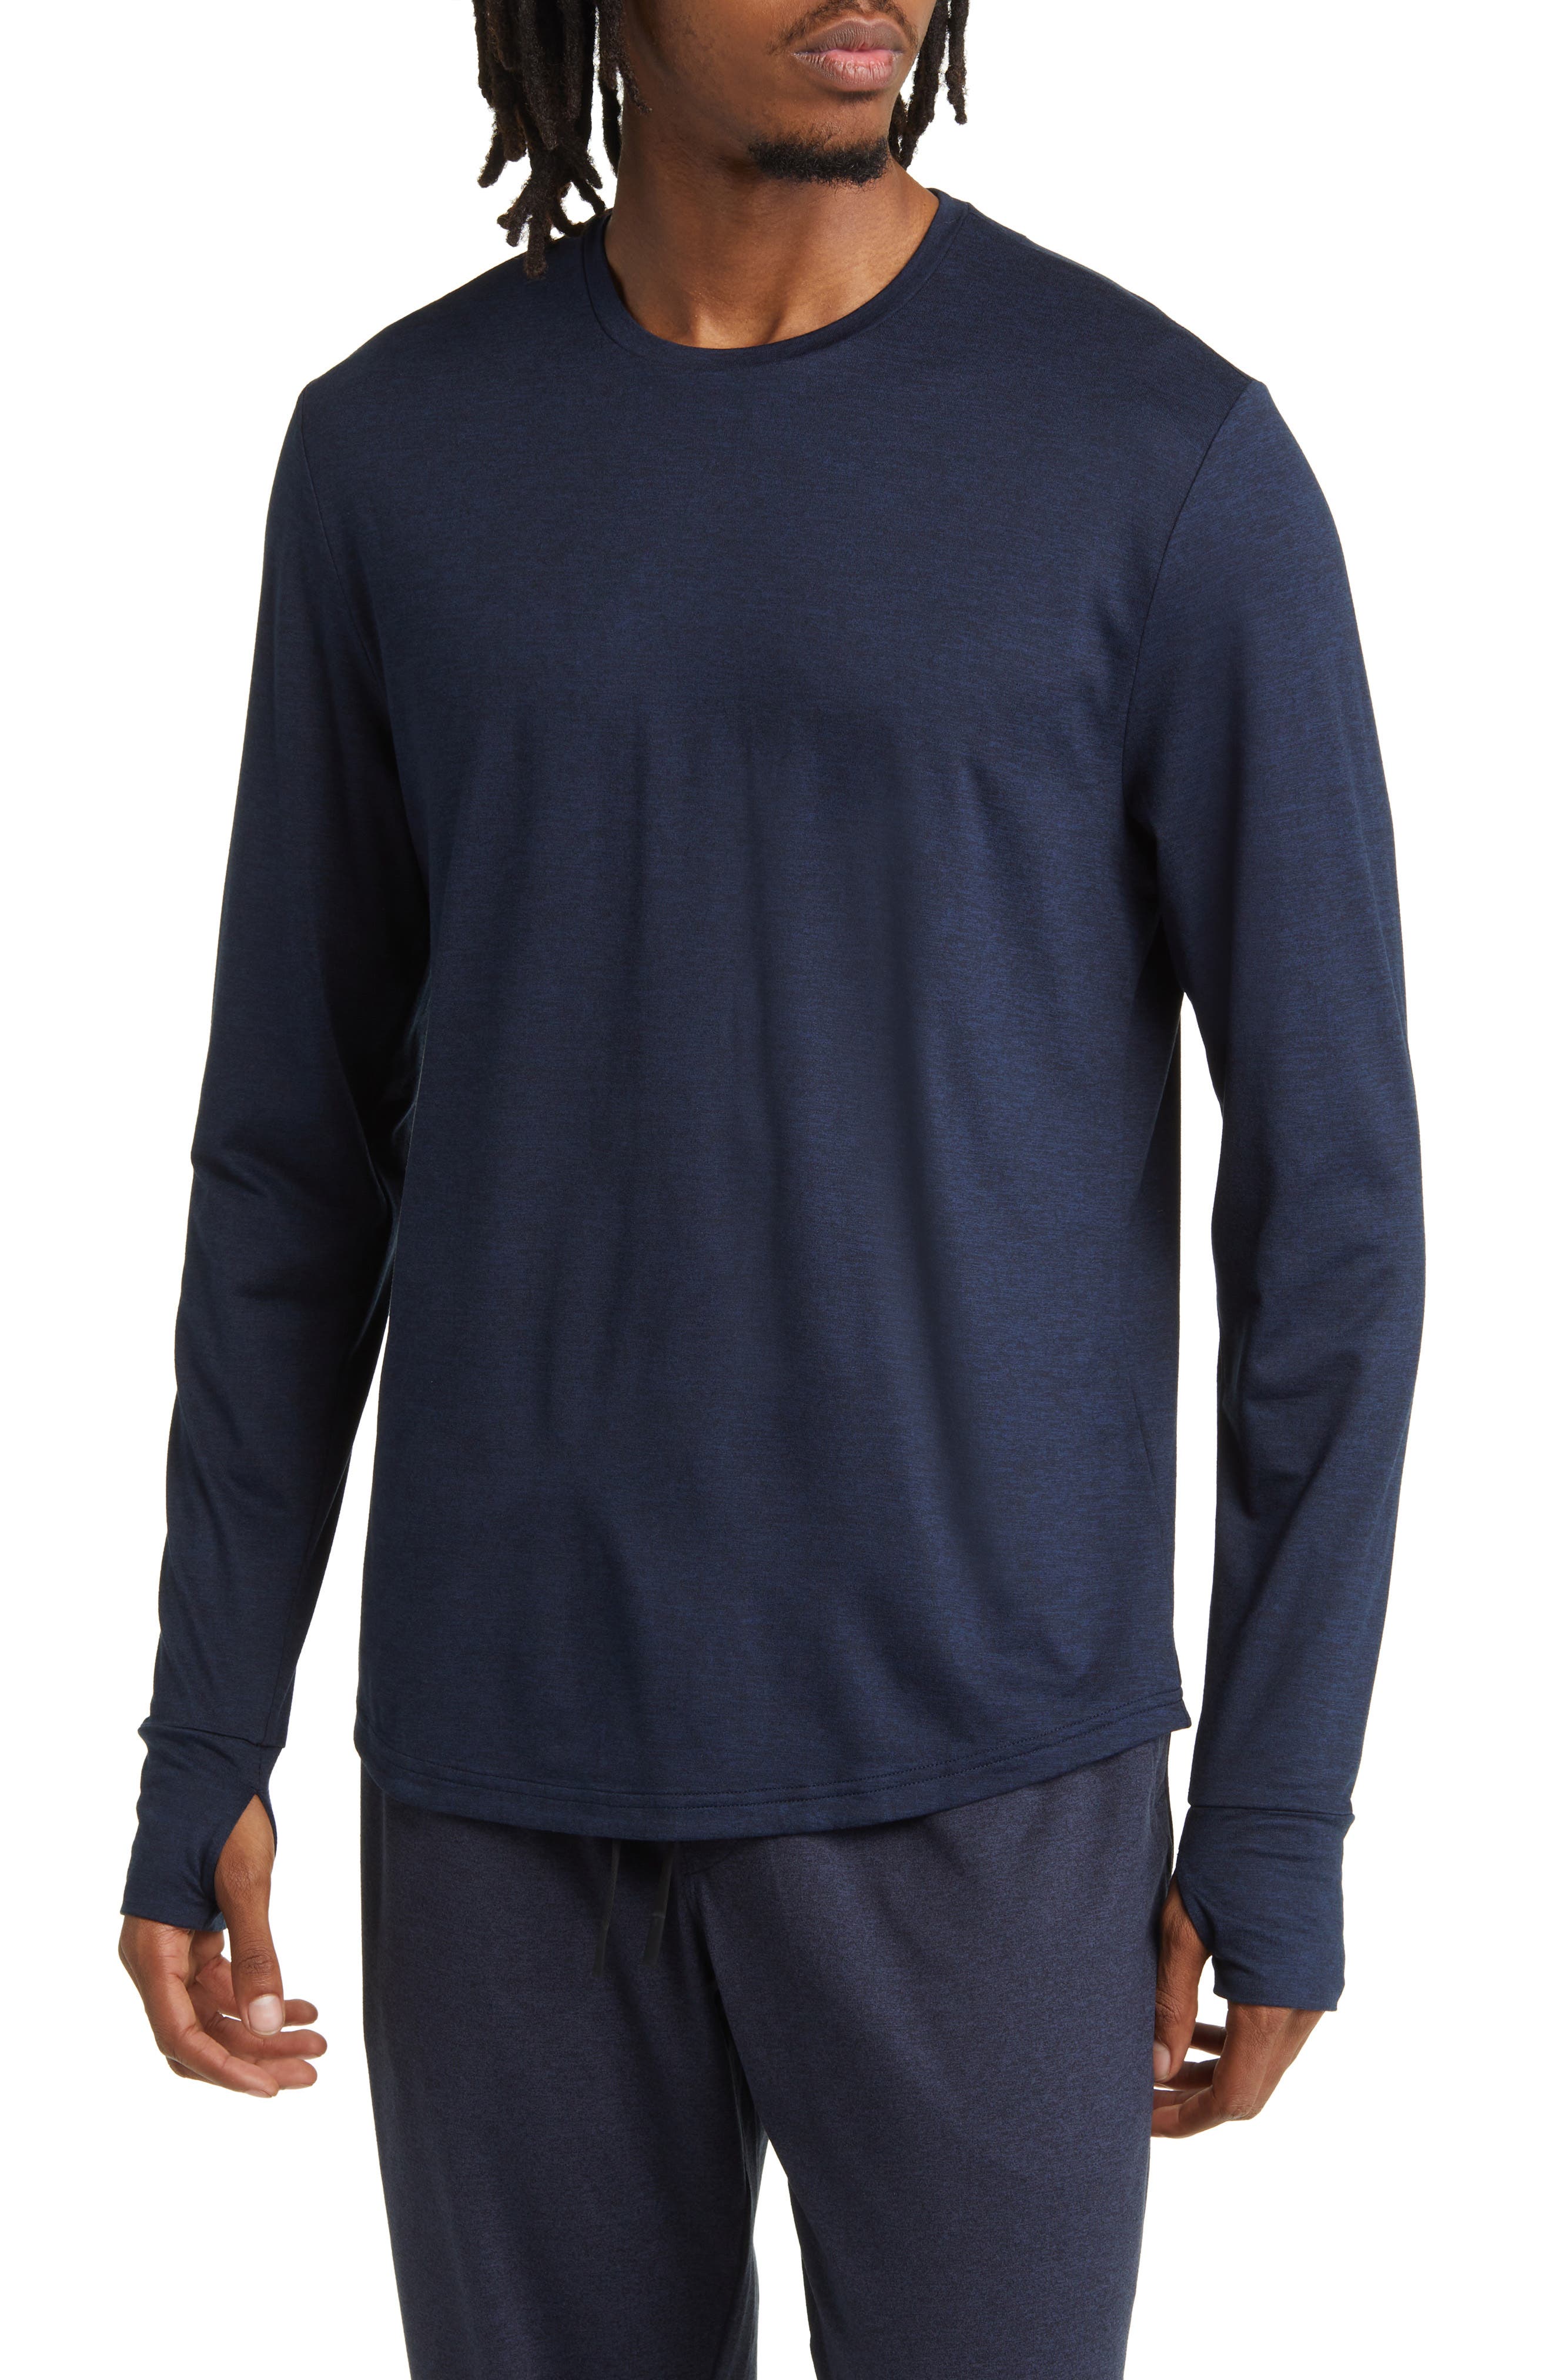 zella Restore Soft Performance Long Sleeve T-Shirt in Navy Eclipse Melange